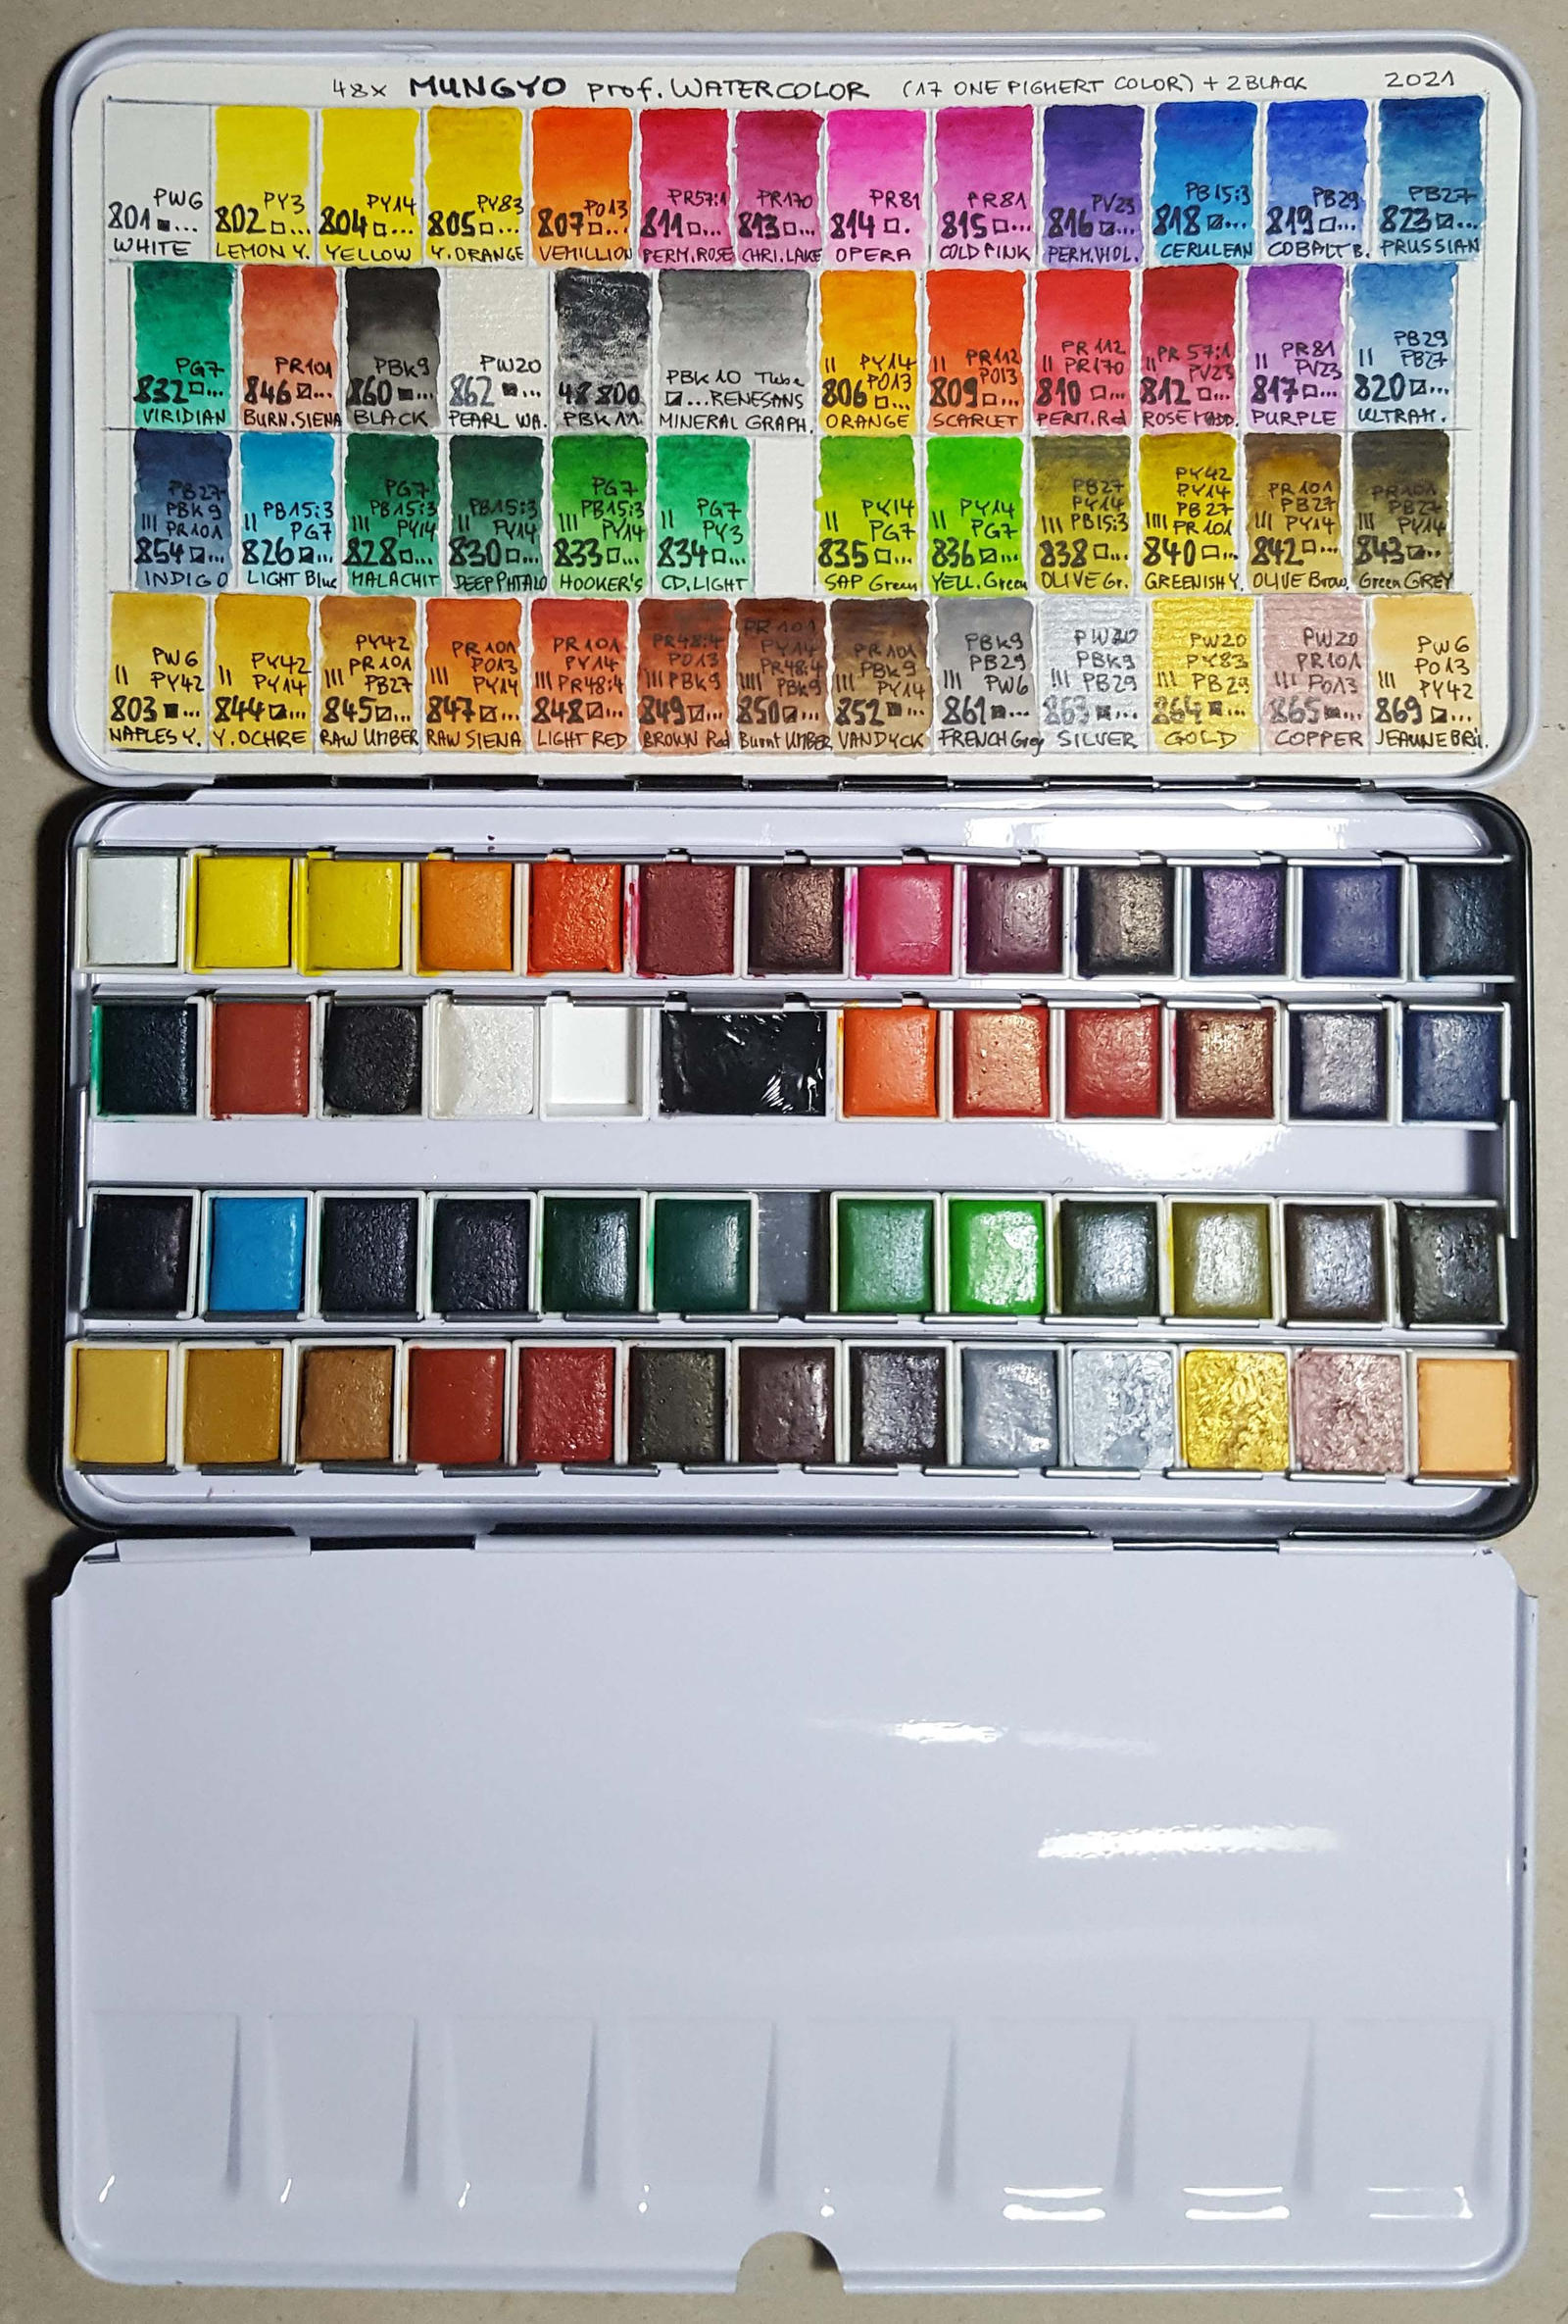 MUNGYO Professional Watercolor 48 Pan Set by pesim65 on DeviantArt